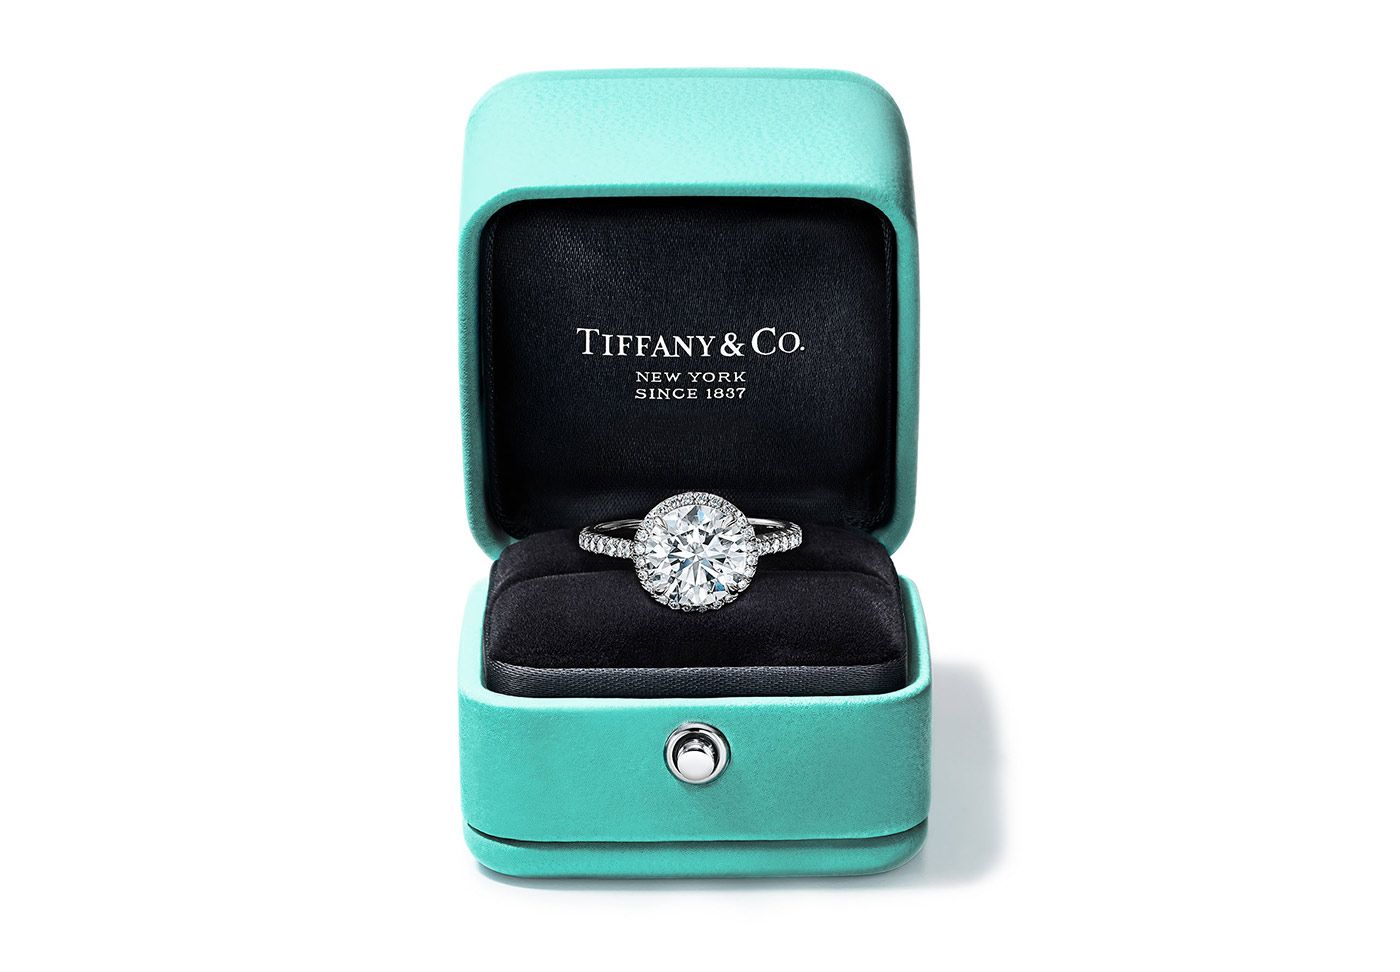 A Tiffany & Co. engagement ring inside a Tiffany Blue box